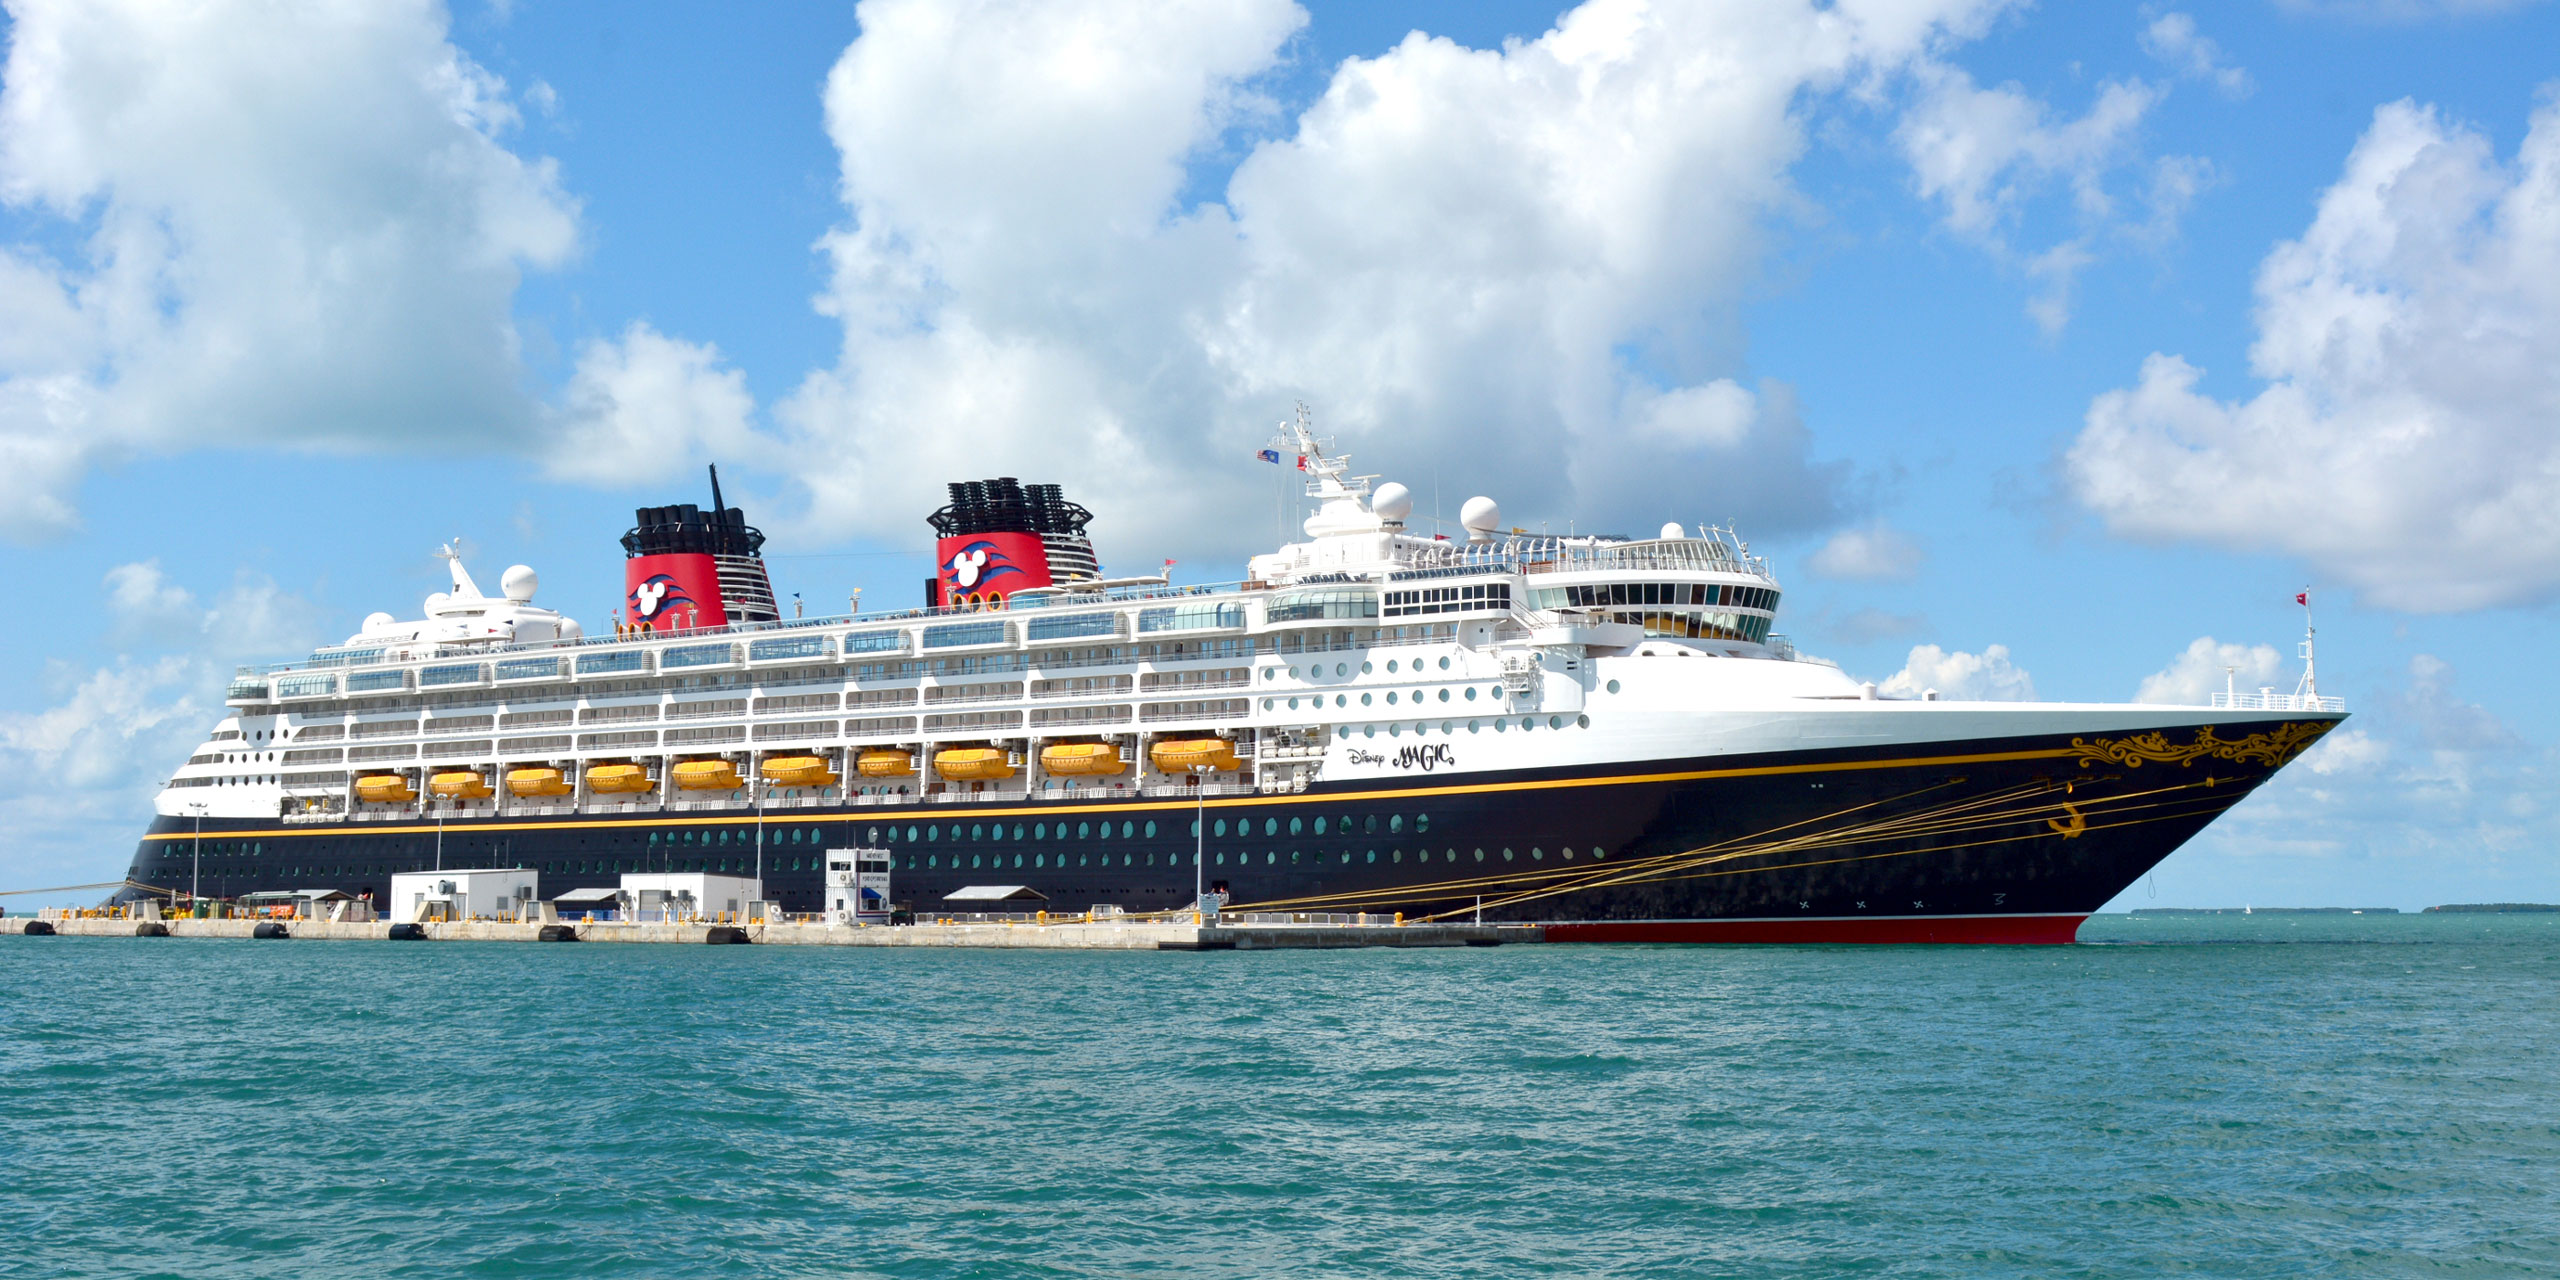 Disney Cruise Ship; Courtesy of Chuck Wagner/Shutterstock.com